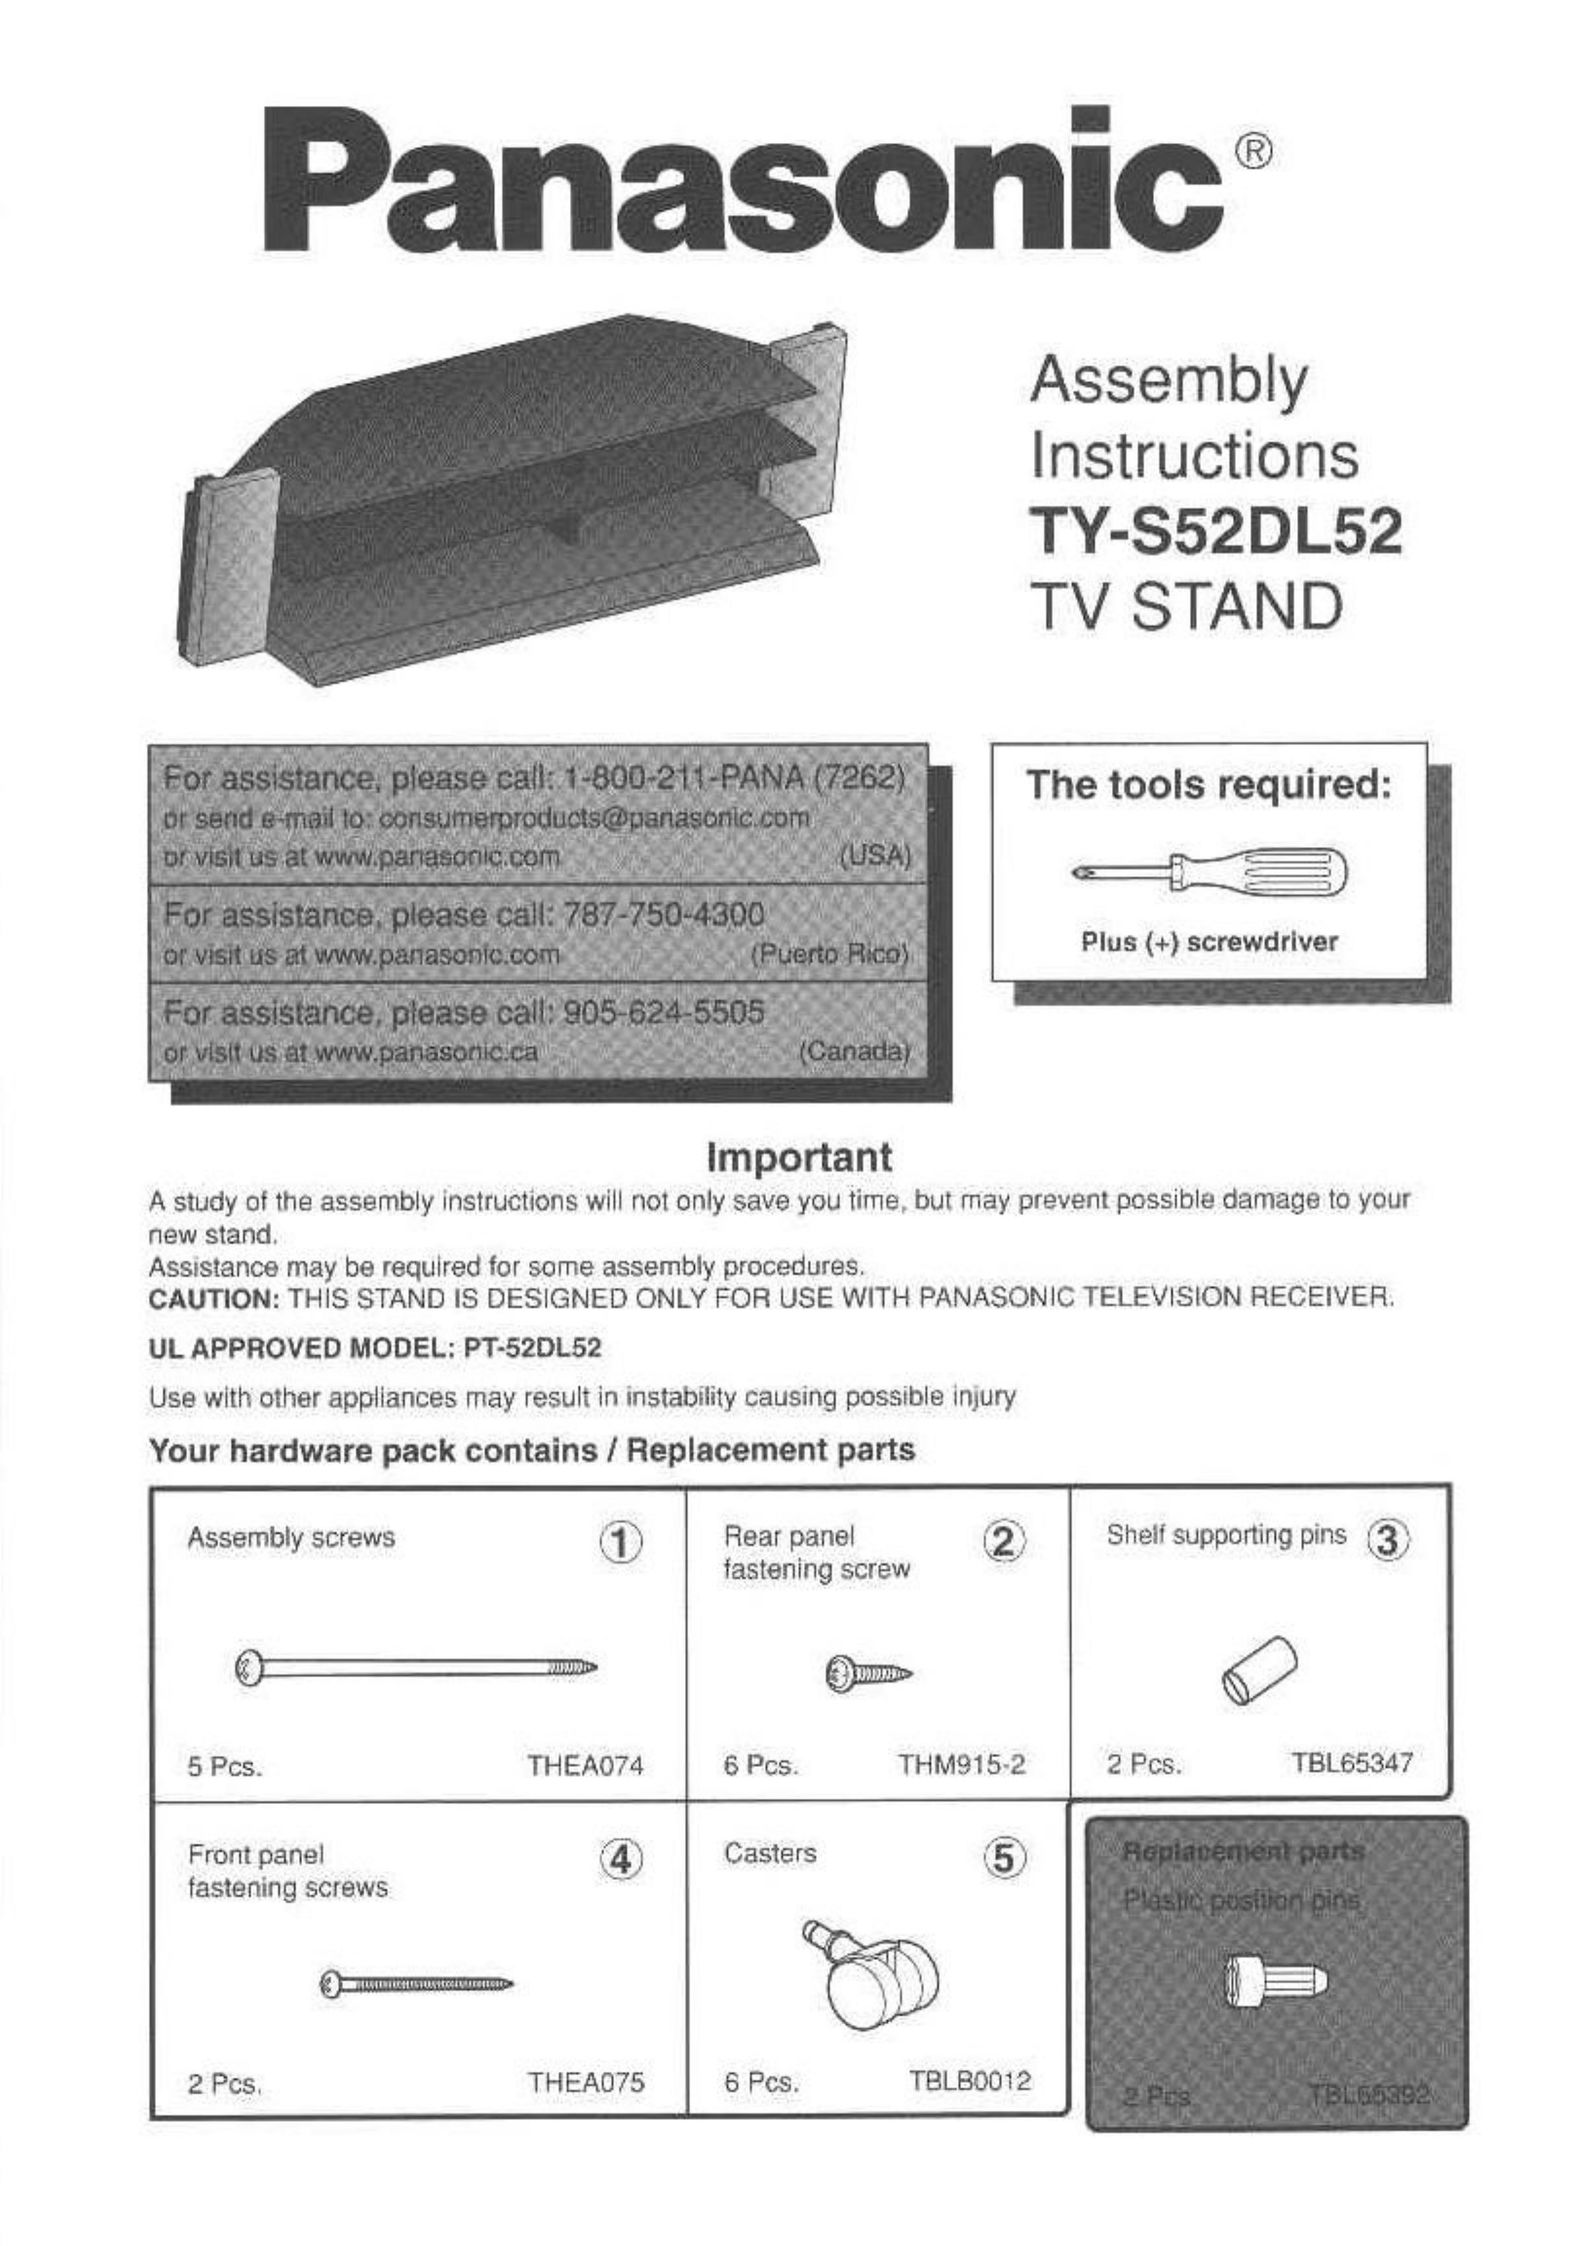 Panasonic TY-S52DL52 TV Video Accessories User Manual